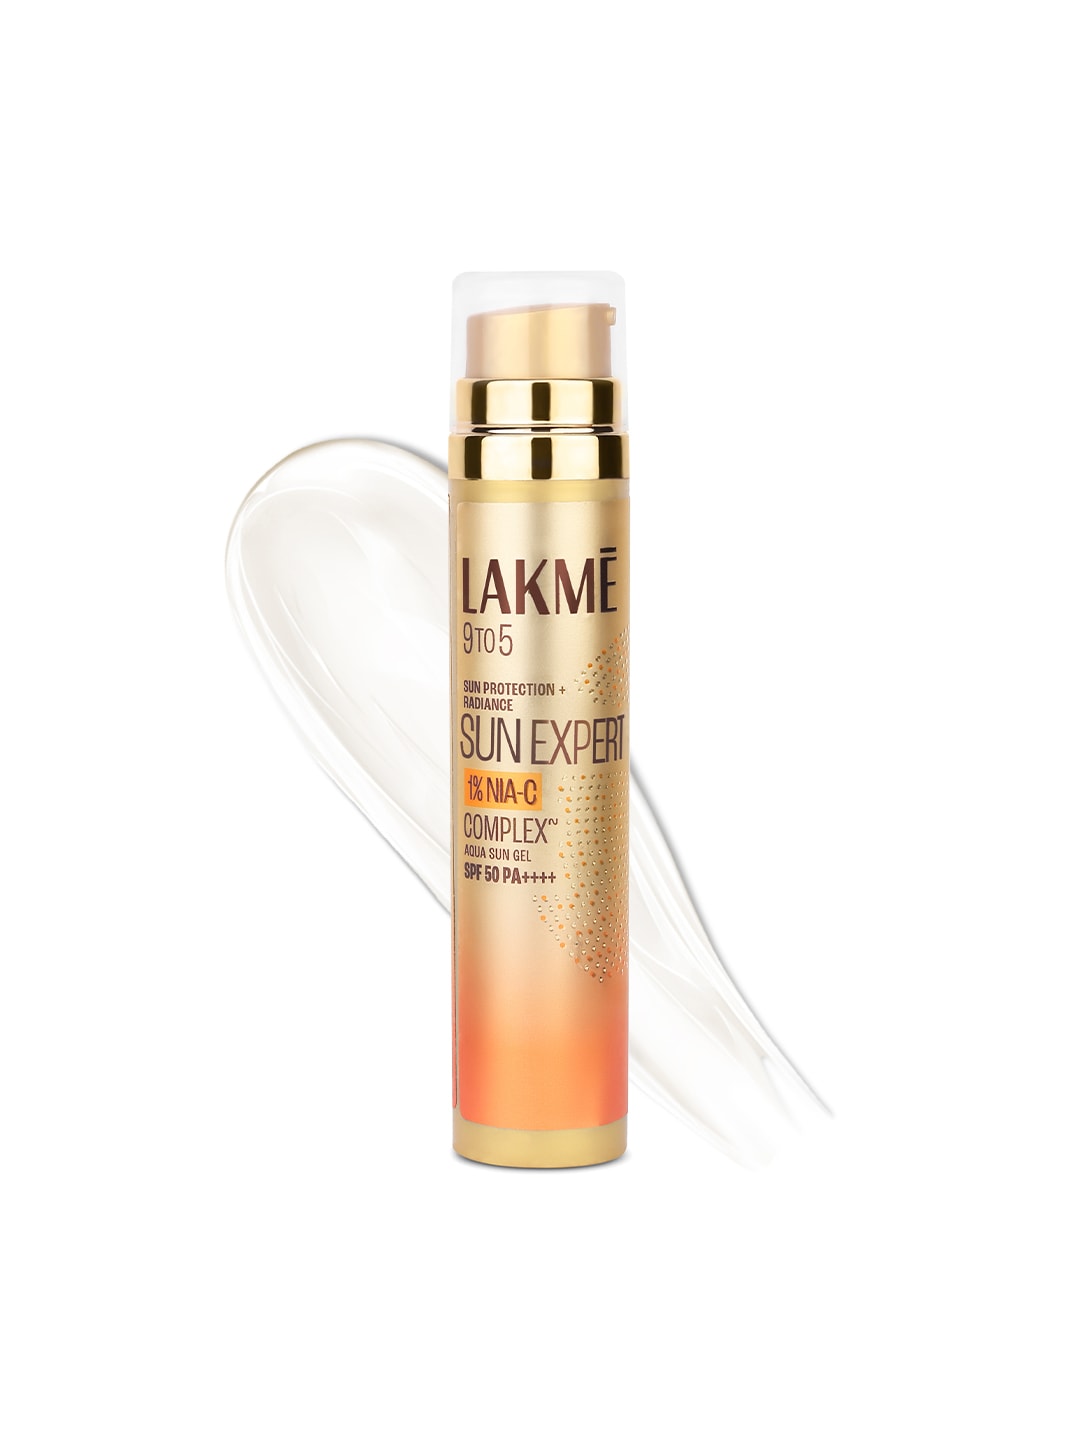 Lakme 9to5 Sun Expert 1% Nia-VIT C Aqua Gel Sunscreen SPF 50 PA+++ for Radiant Skin - 56g